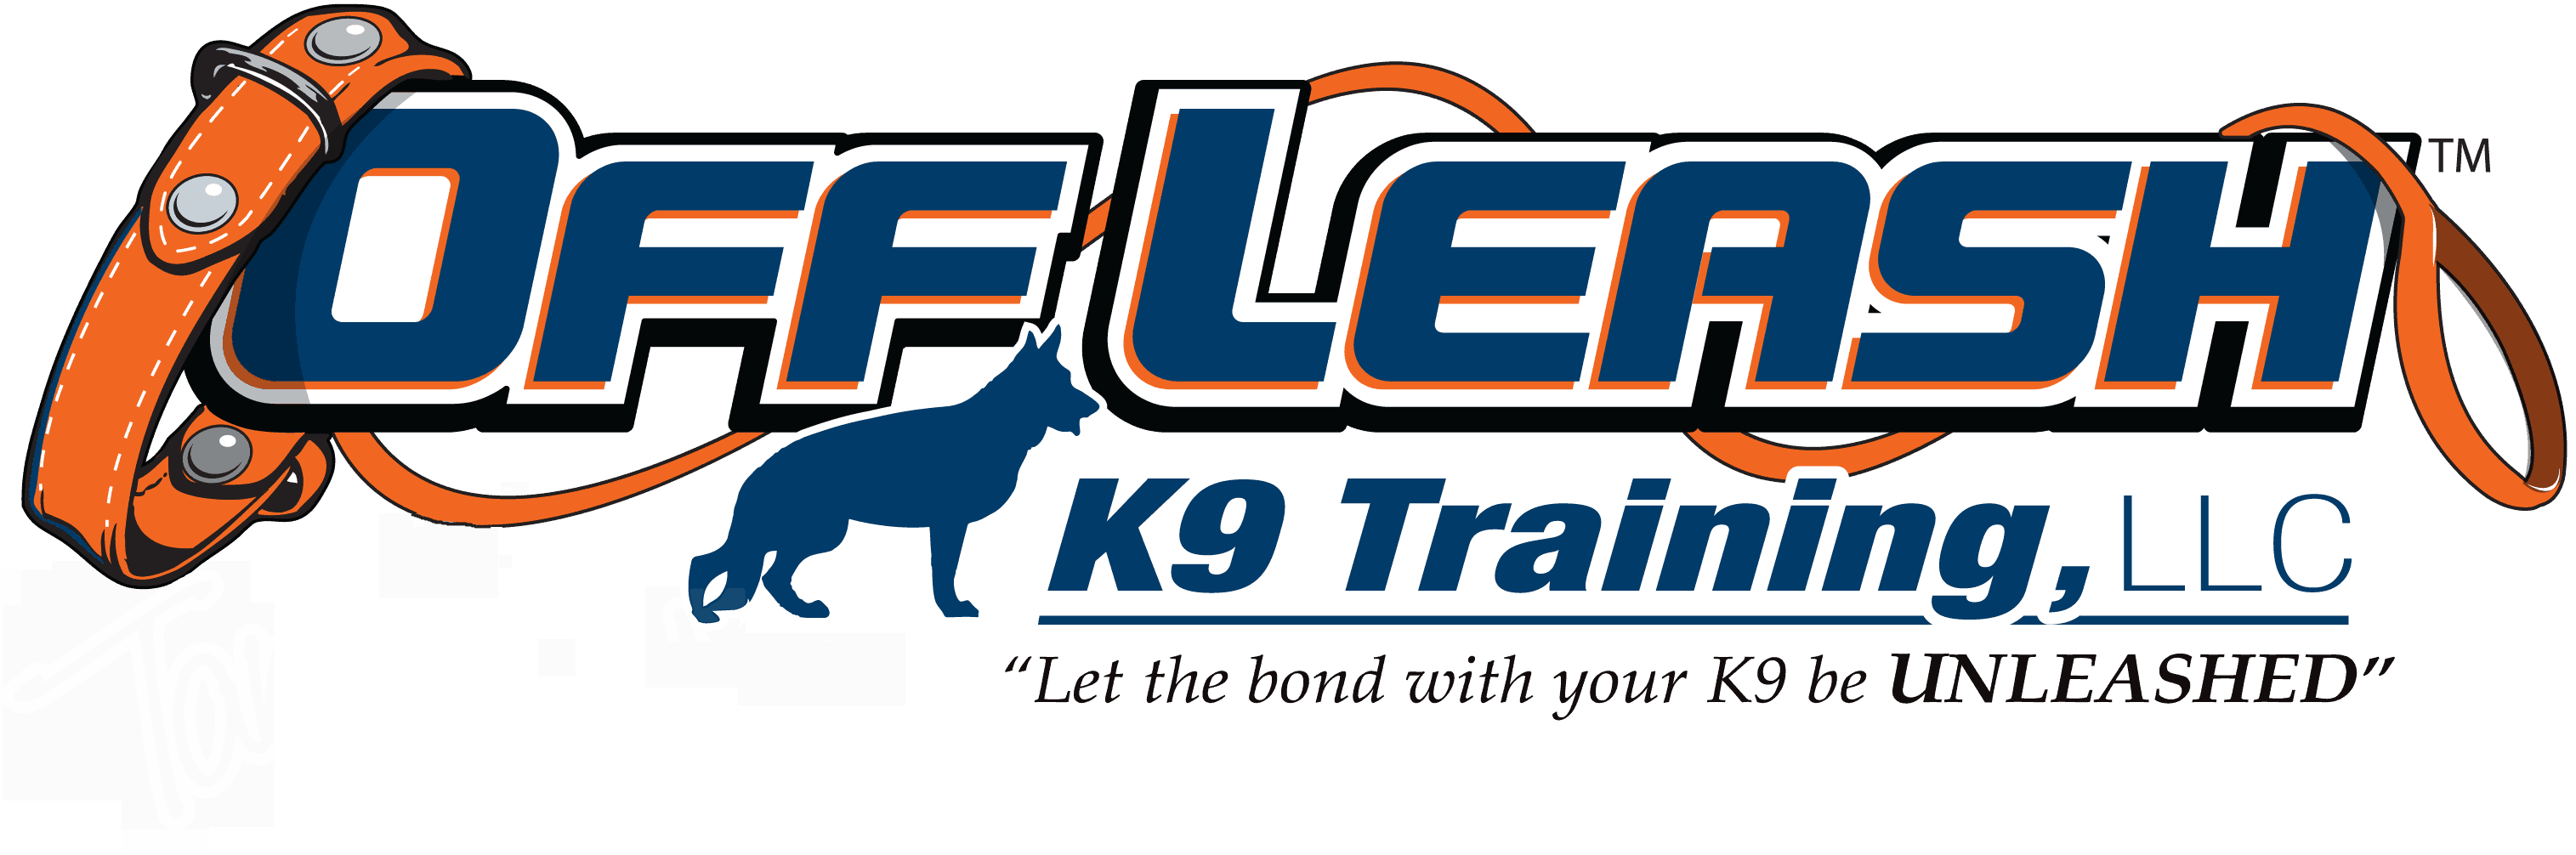 All-X K9 - Dog Training - Louisville, Kentucky